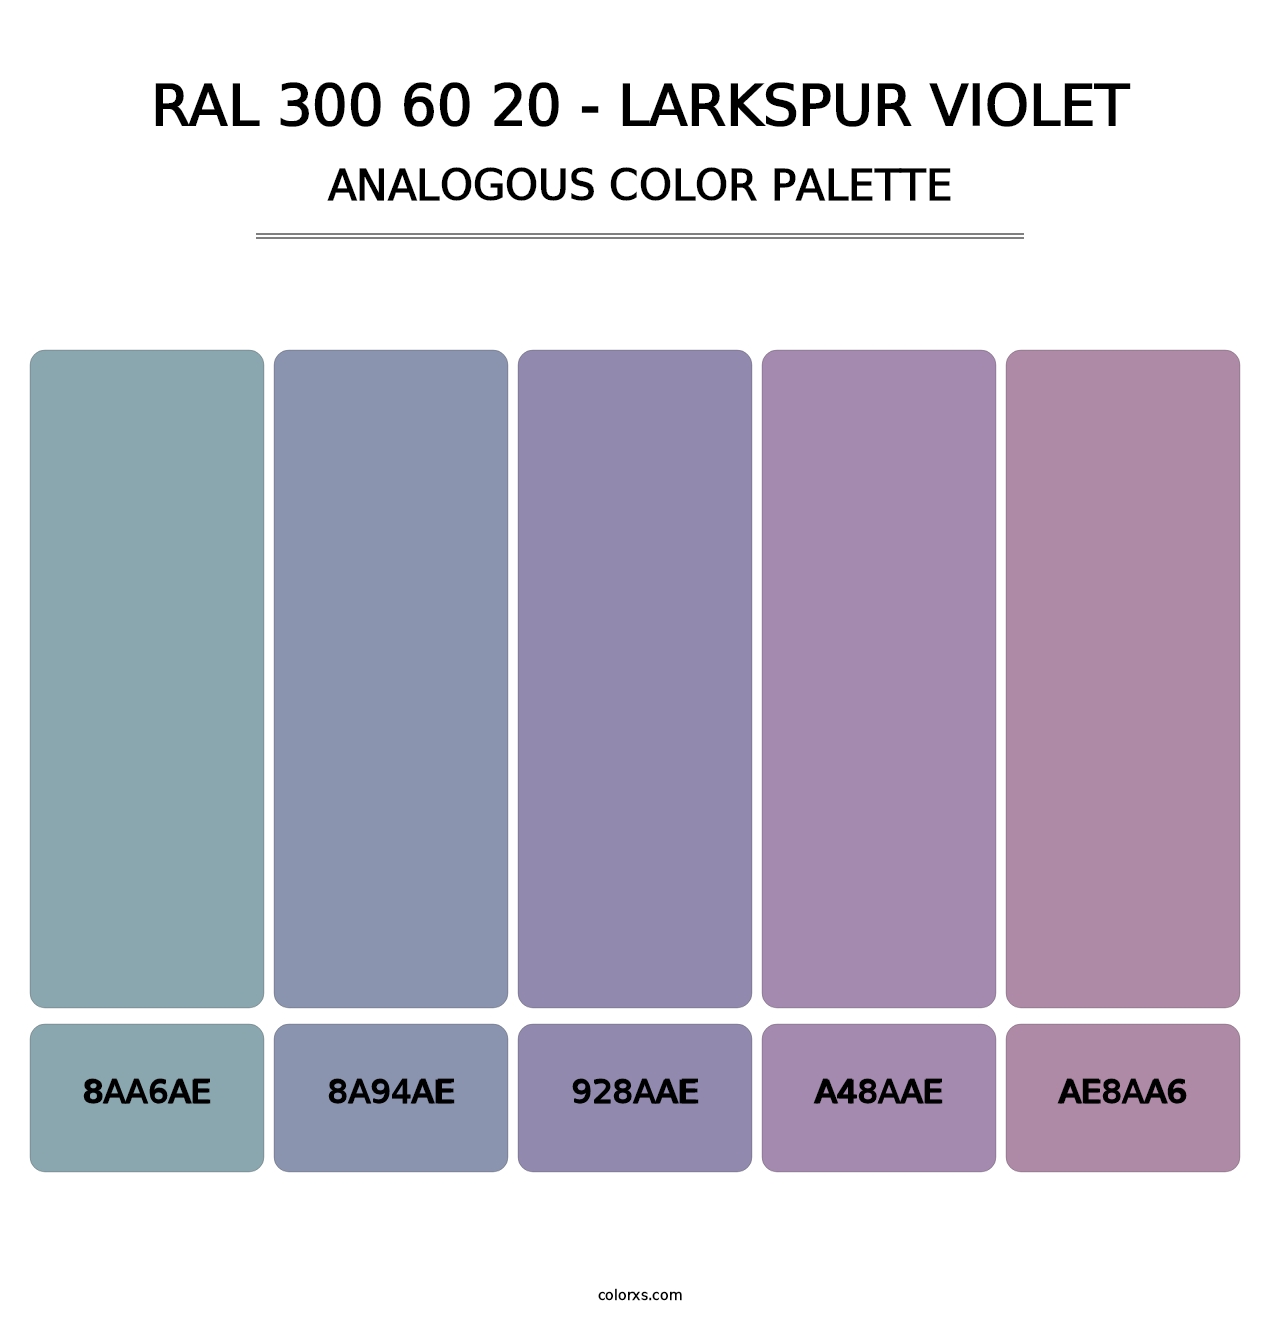 RAL 300 60 20 - Larkspur Violet - Analogous Color Palette